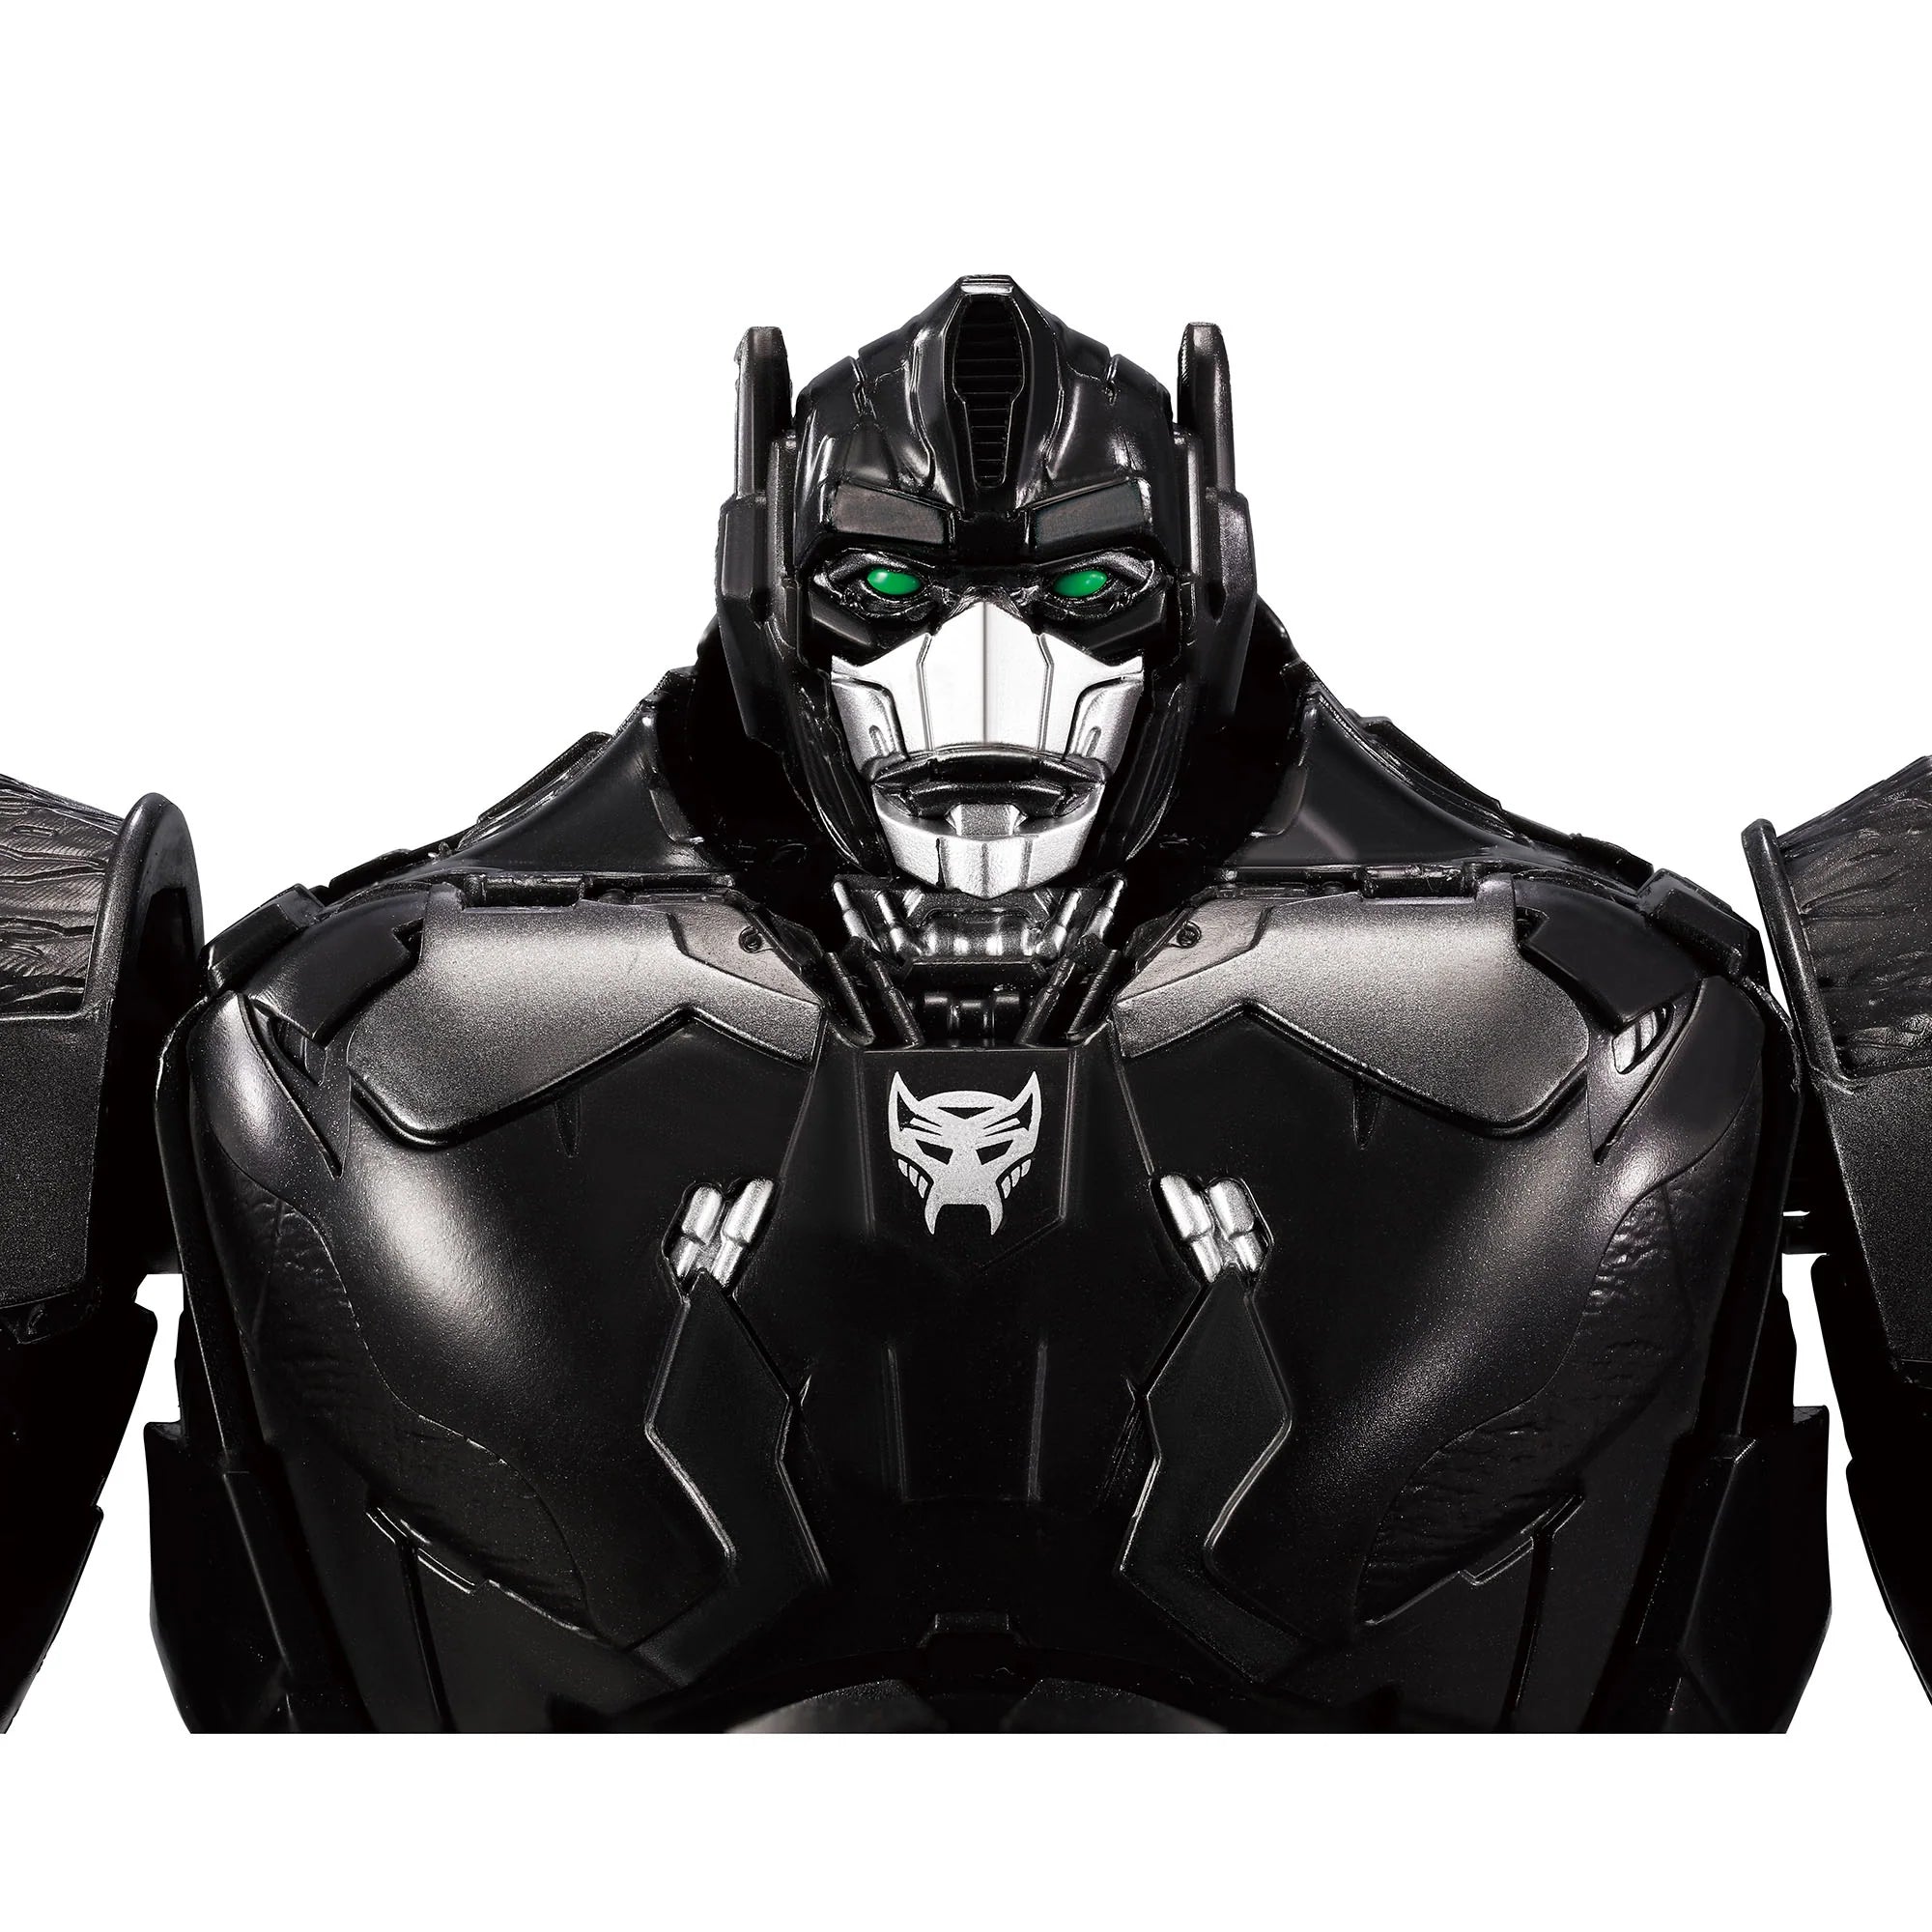 TakaraTomy - Transformers: Rise of the Beasts - Awakening Optimus Primal